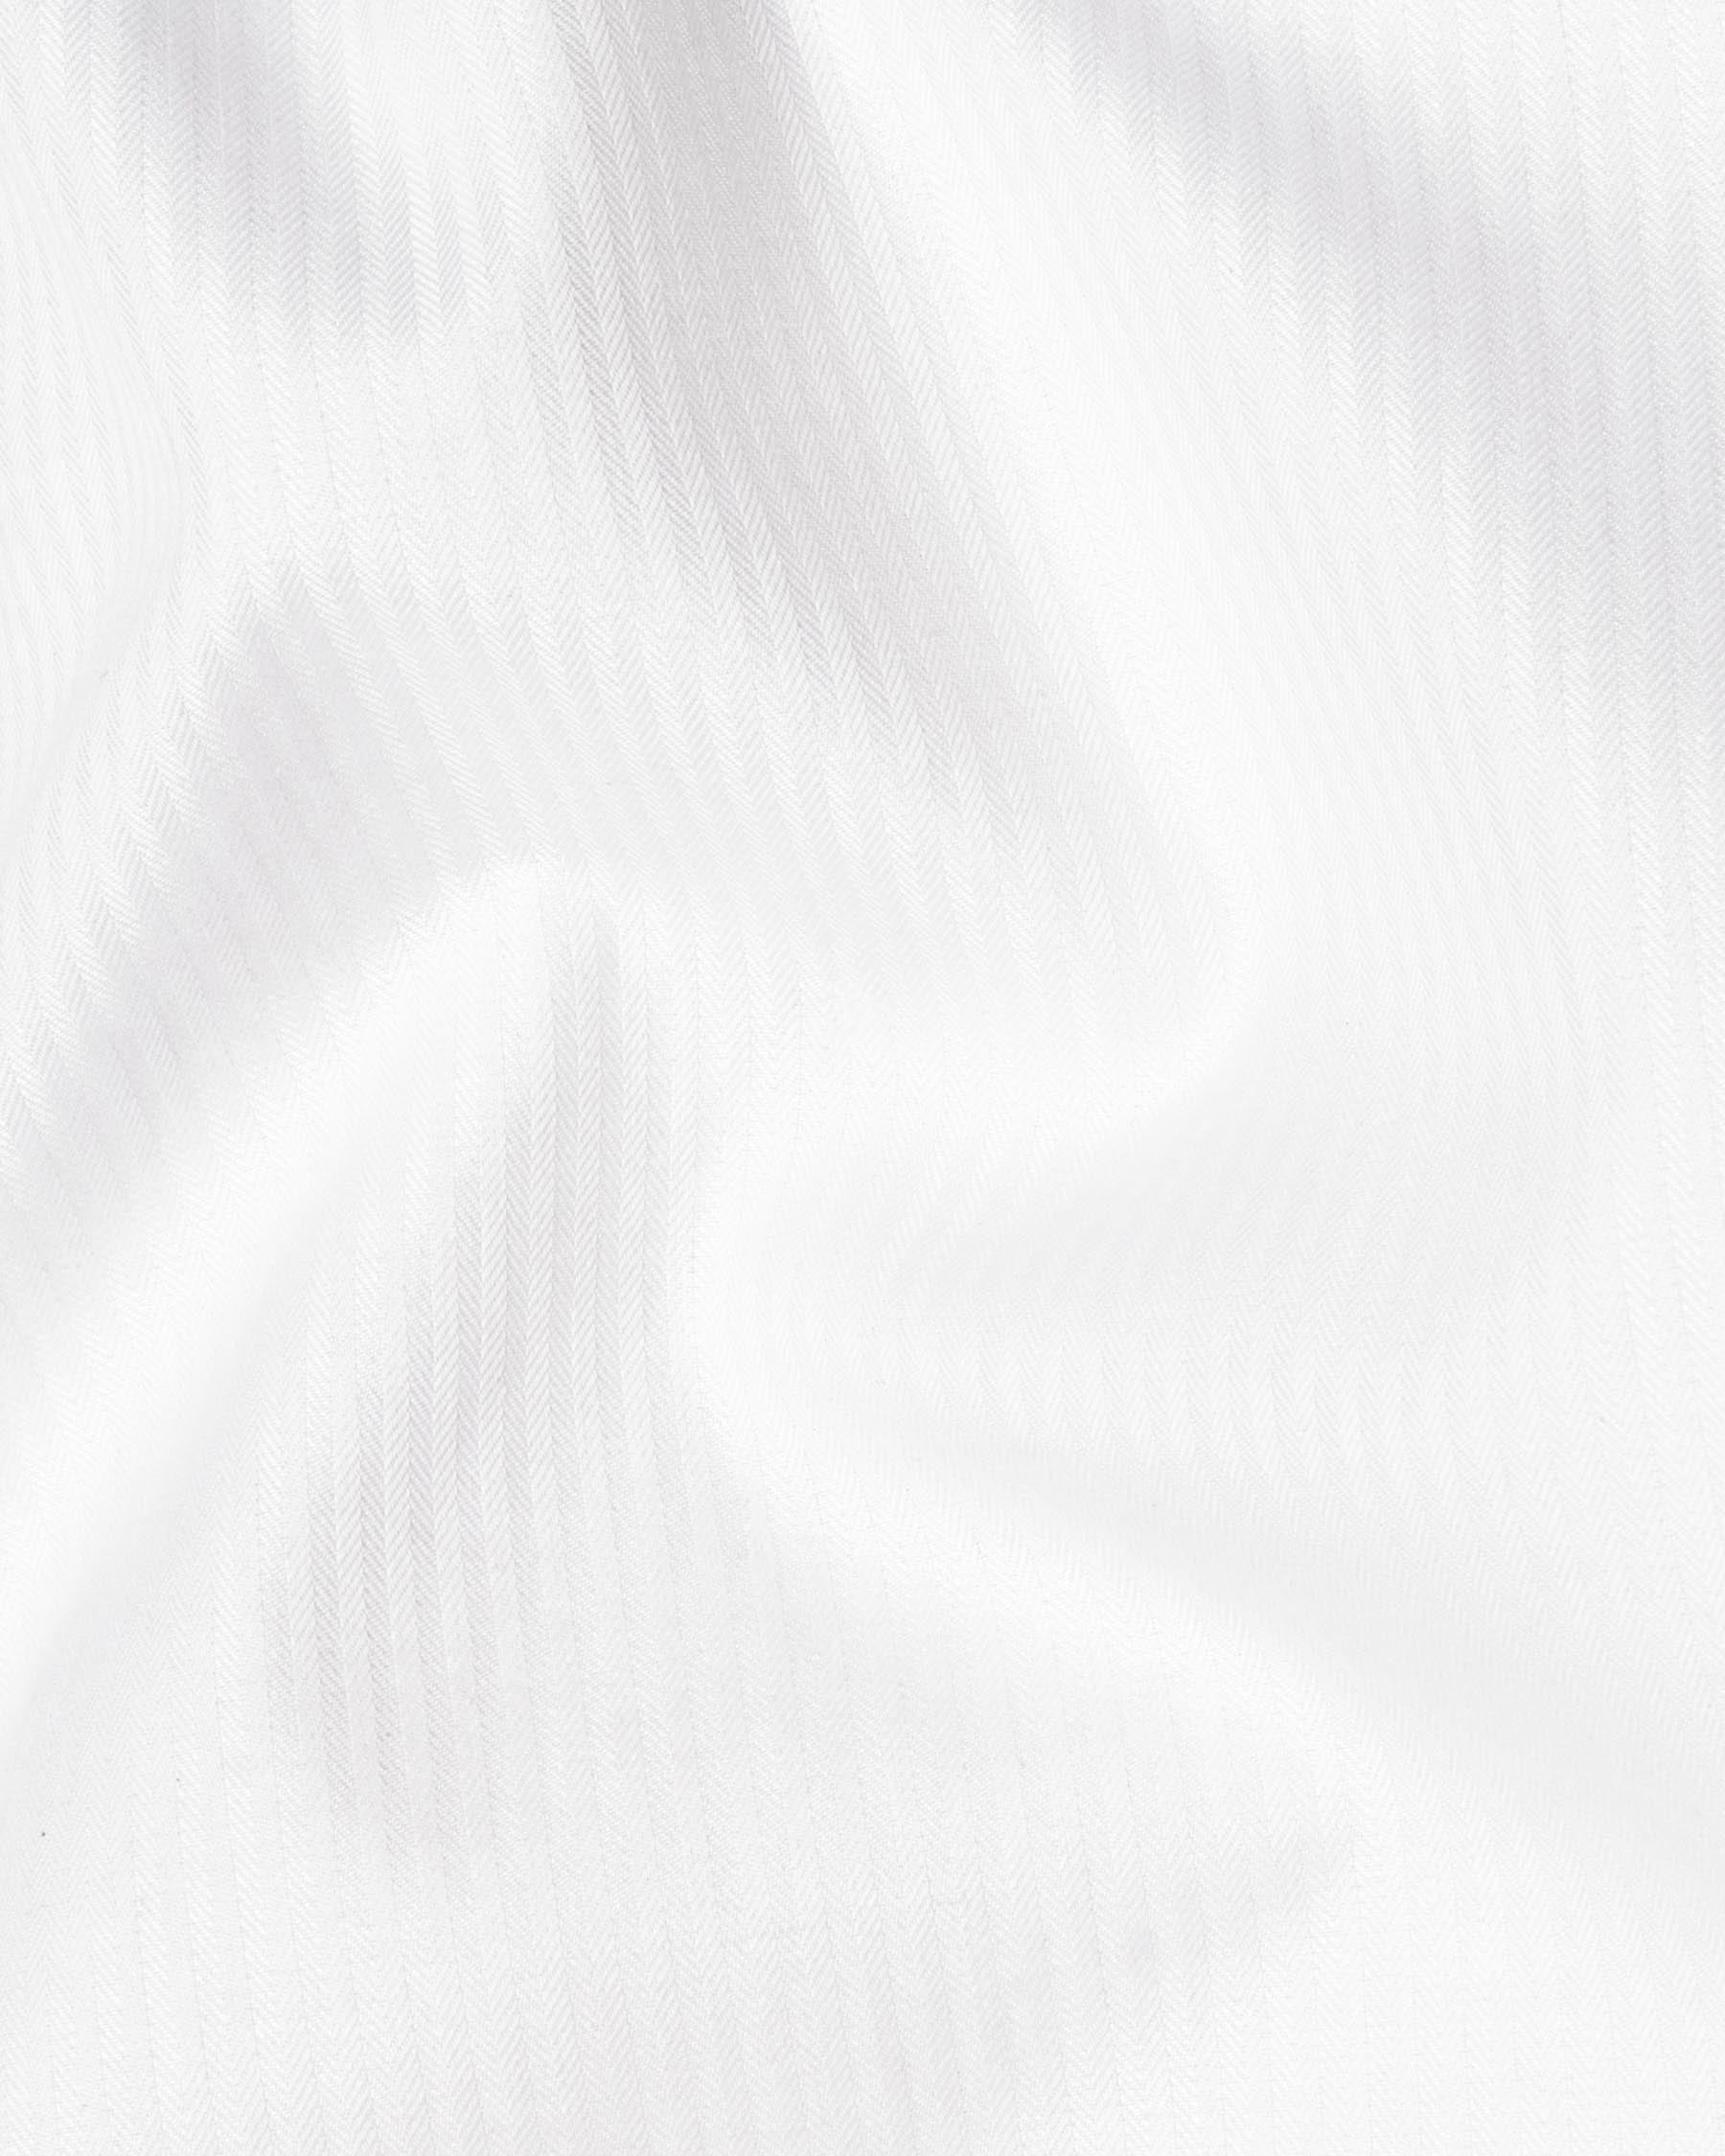 Bright White Subtle Dobby Striped Premium Giza Cotton Shirt 6017-38,6017-H-38,6017-39,6017-H-39,6017-40,6017-H-40,6017-42,6017-H-42,6017-44,6017-H-44,6017-46,6017-H-46,6017-48,6017-H-48,6017-50,6017-H-50,6017-52,6017-H-52